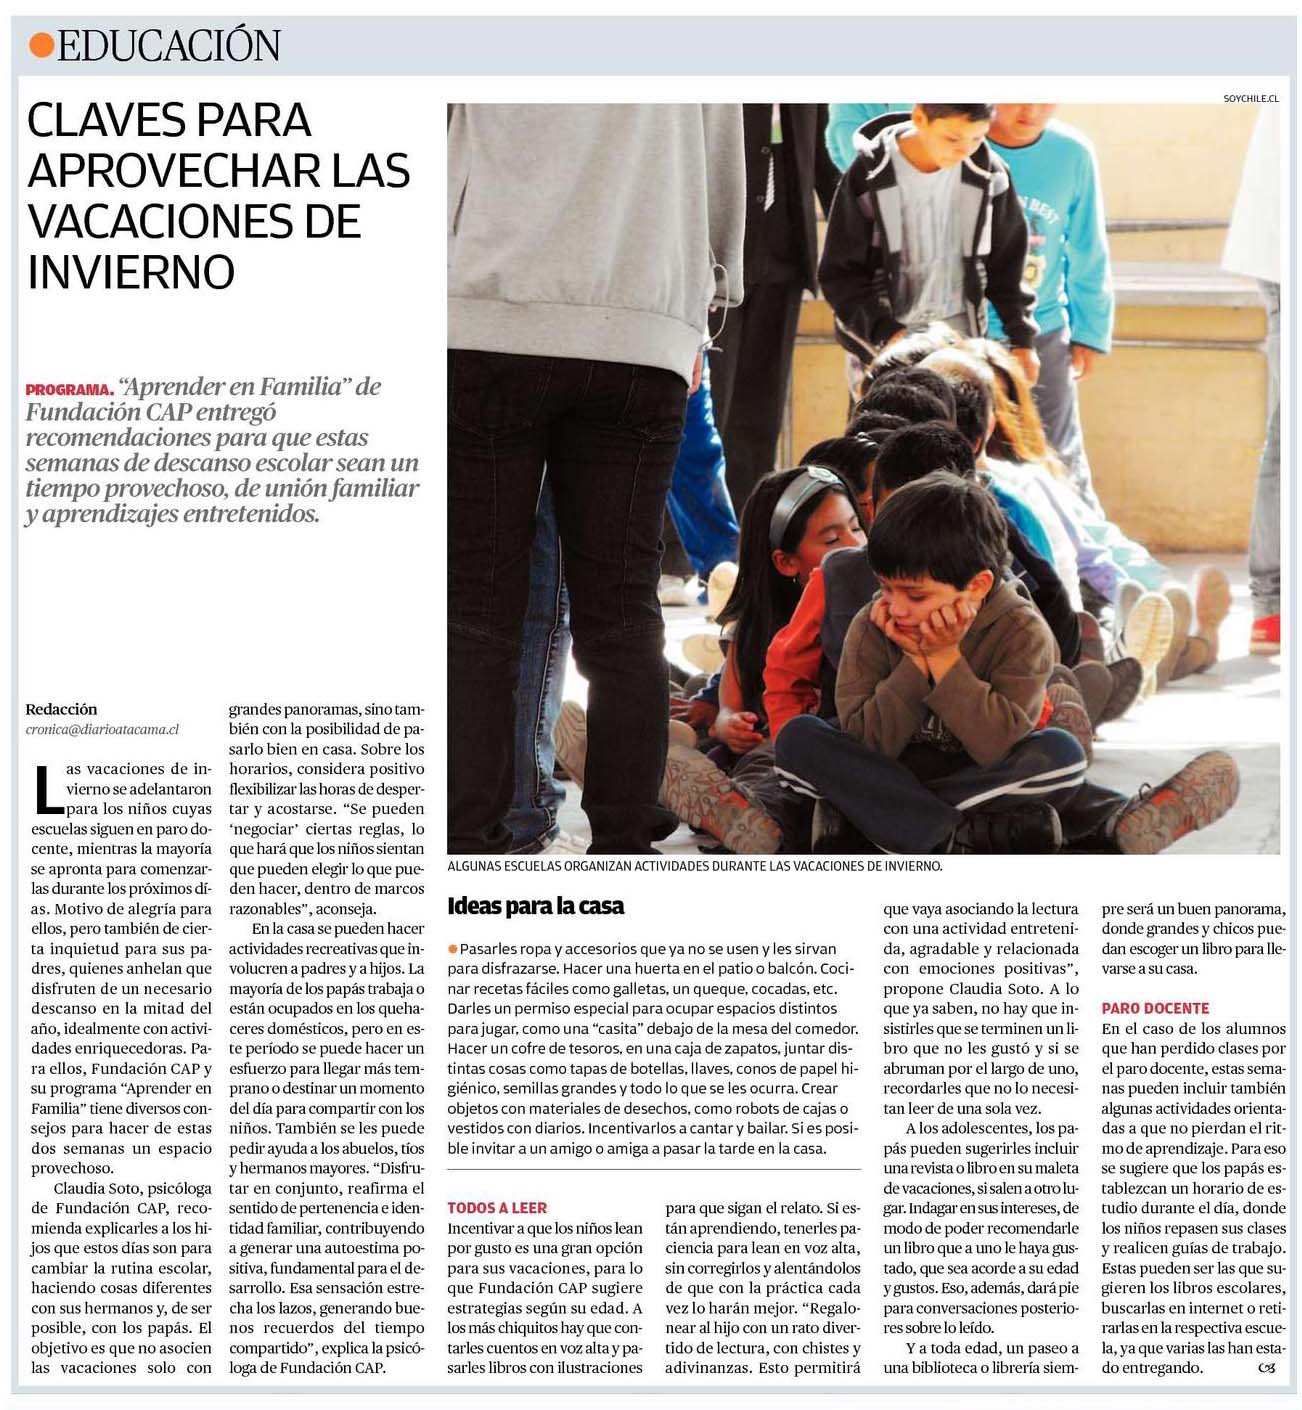 Diario-de-Atacama-Educacion-9-julio-2015.jpg